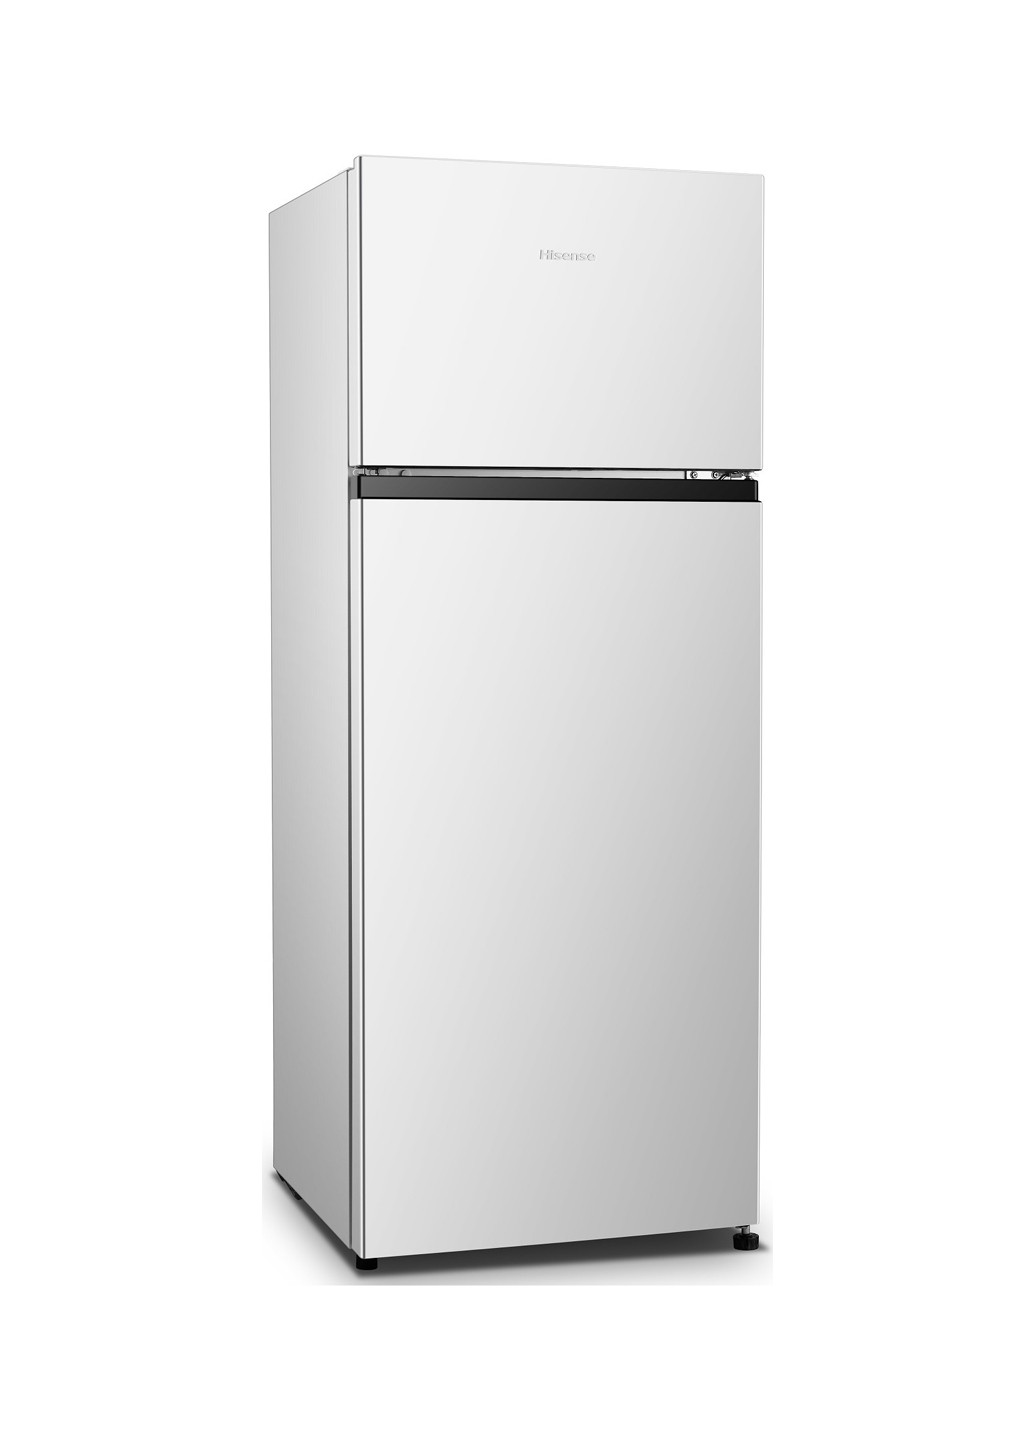 Холодильник RD-27DR4SLA / CPA1-001 Hisense rd-27dr4sla/cpa1-001 (142685250)